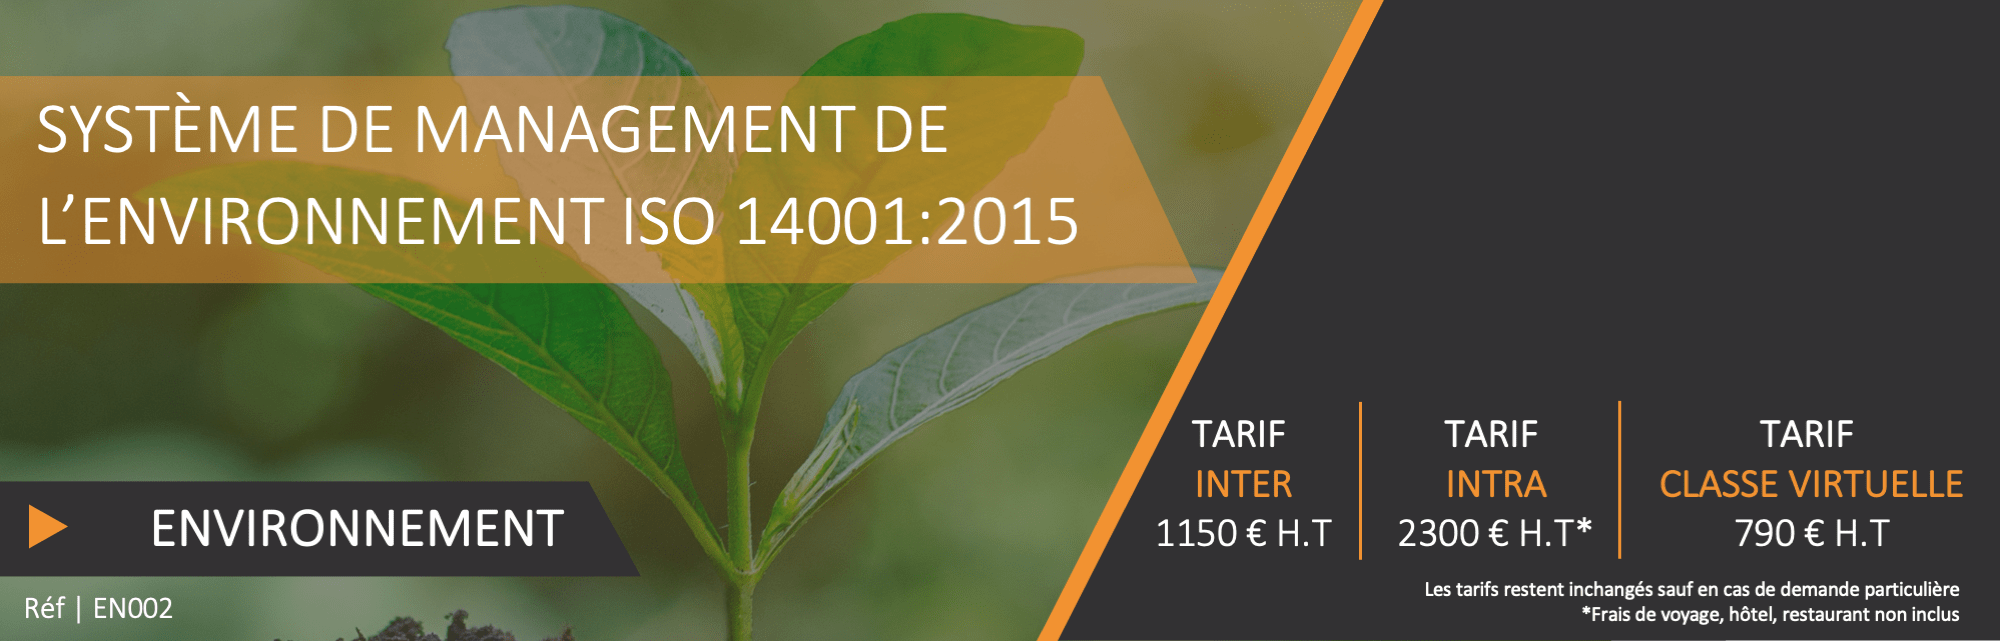 Plante verte ISO 14001 environnement